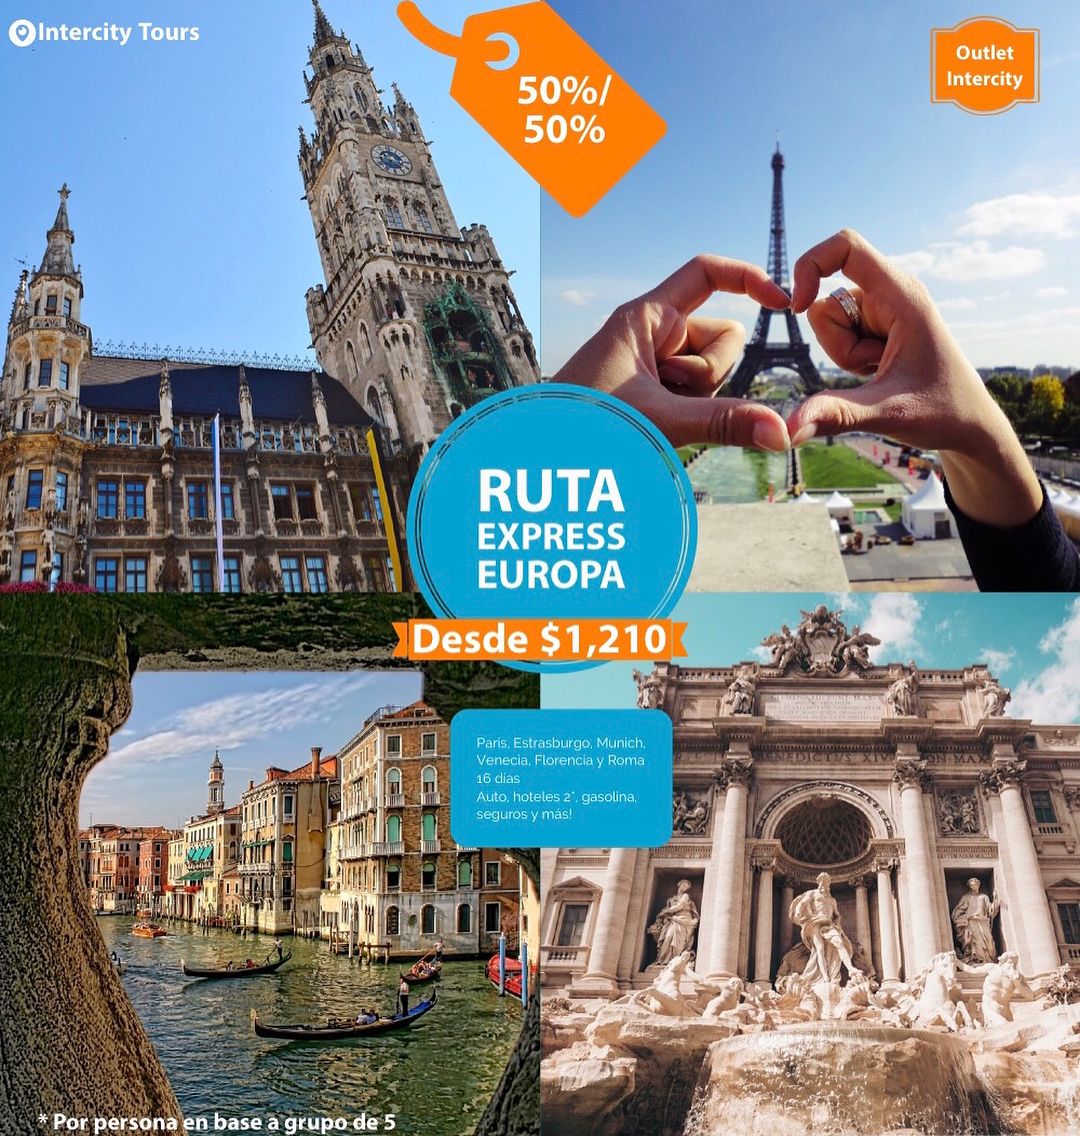 RUTA EXPRESS EUROPA